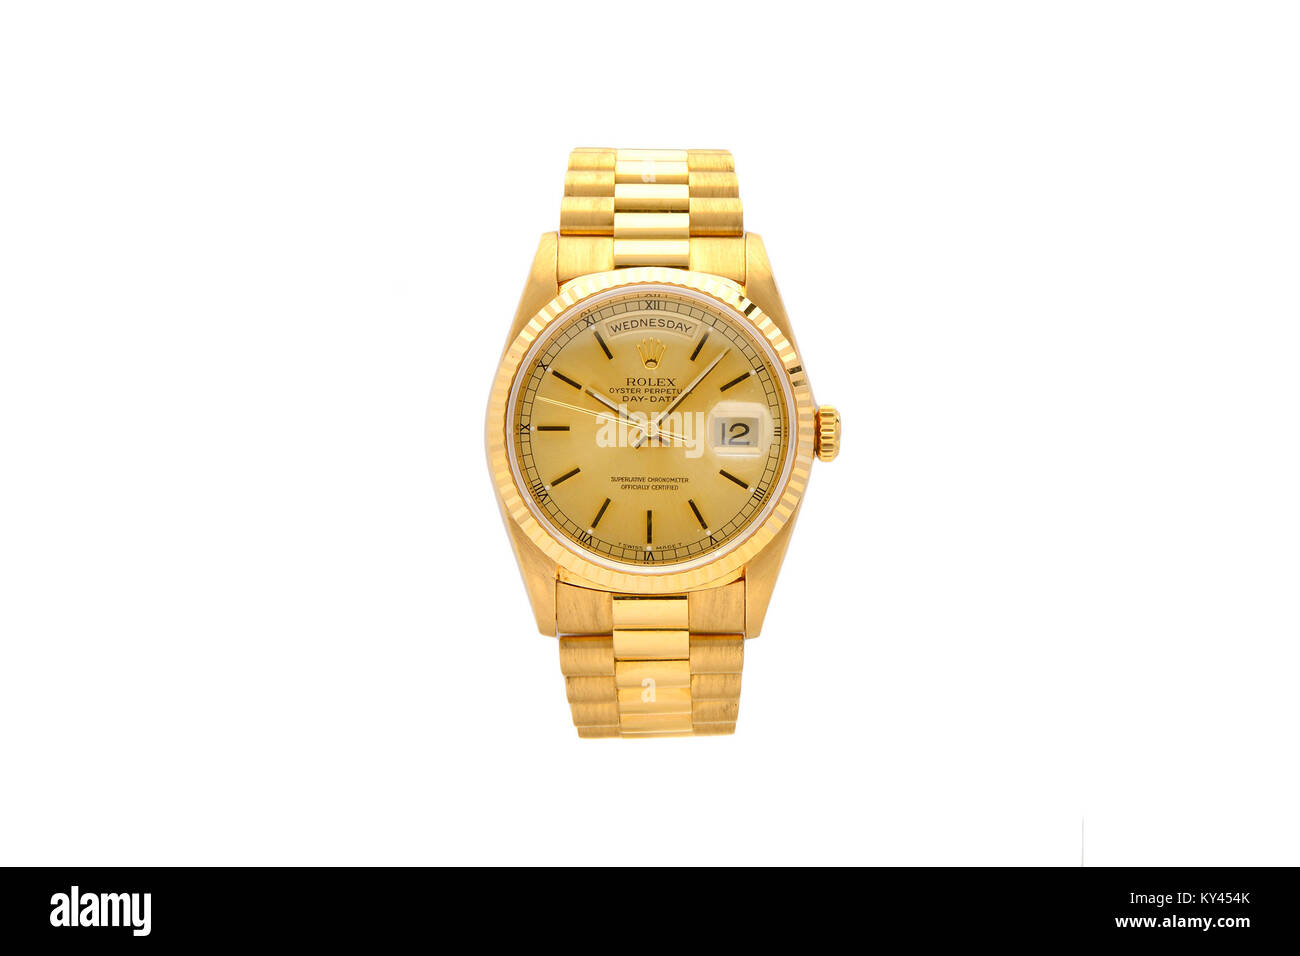 Rolex Oyster oro reloj de hombre con cara de oro Foto de stock